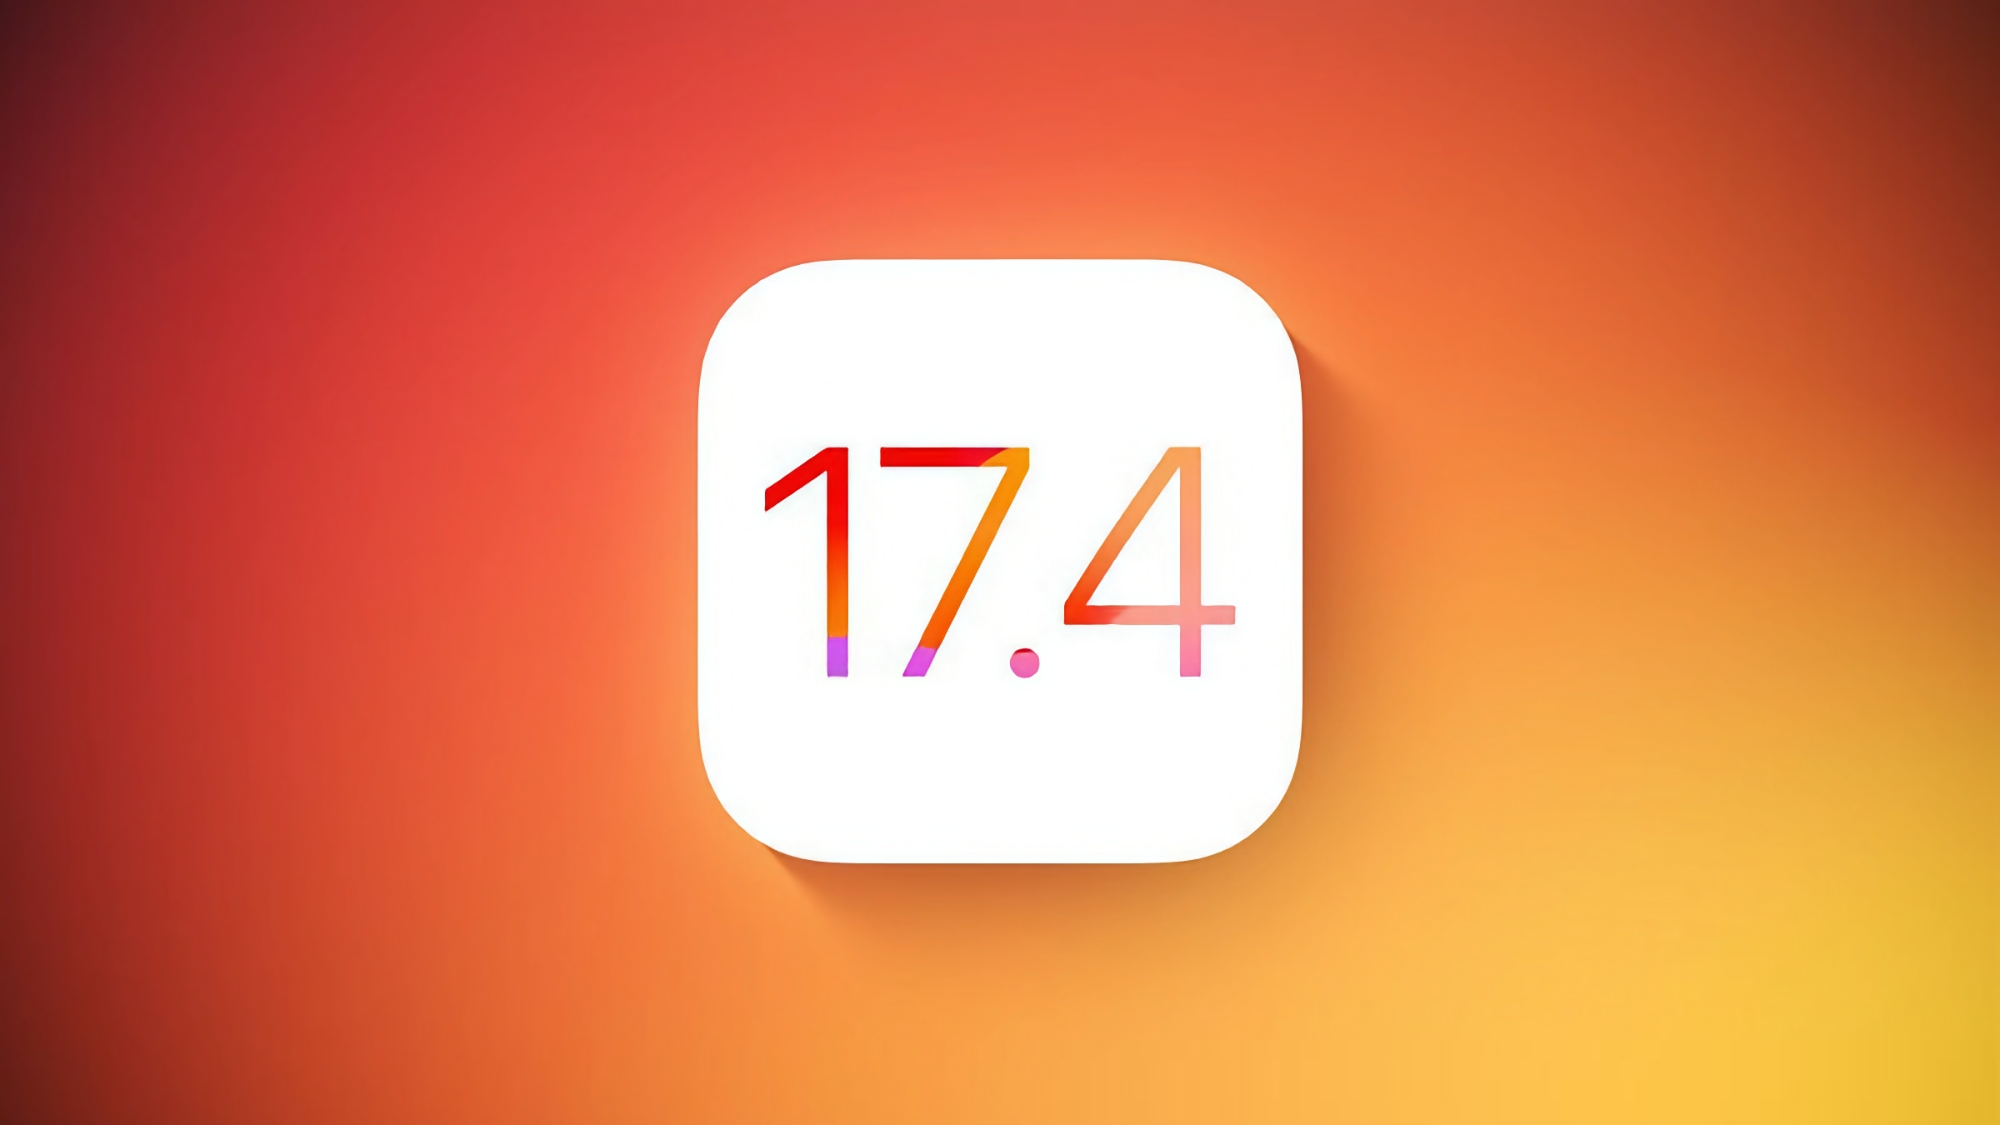 Apple har tillkännagivit iOS 17.4 Release Candidate